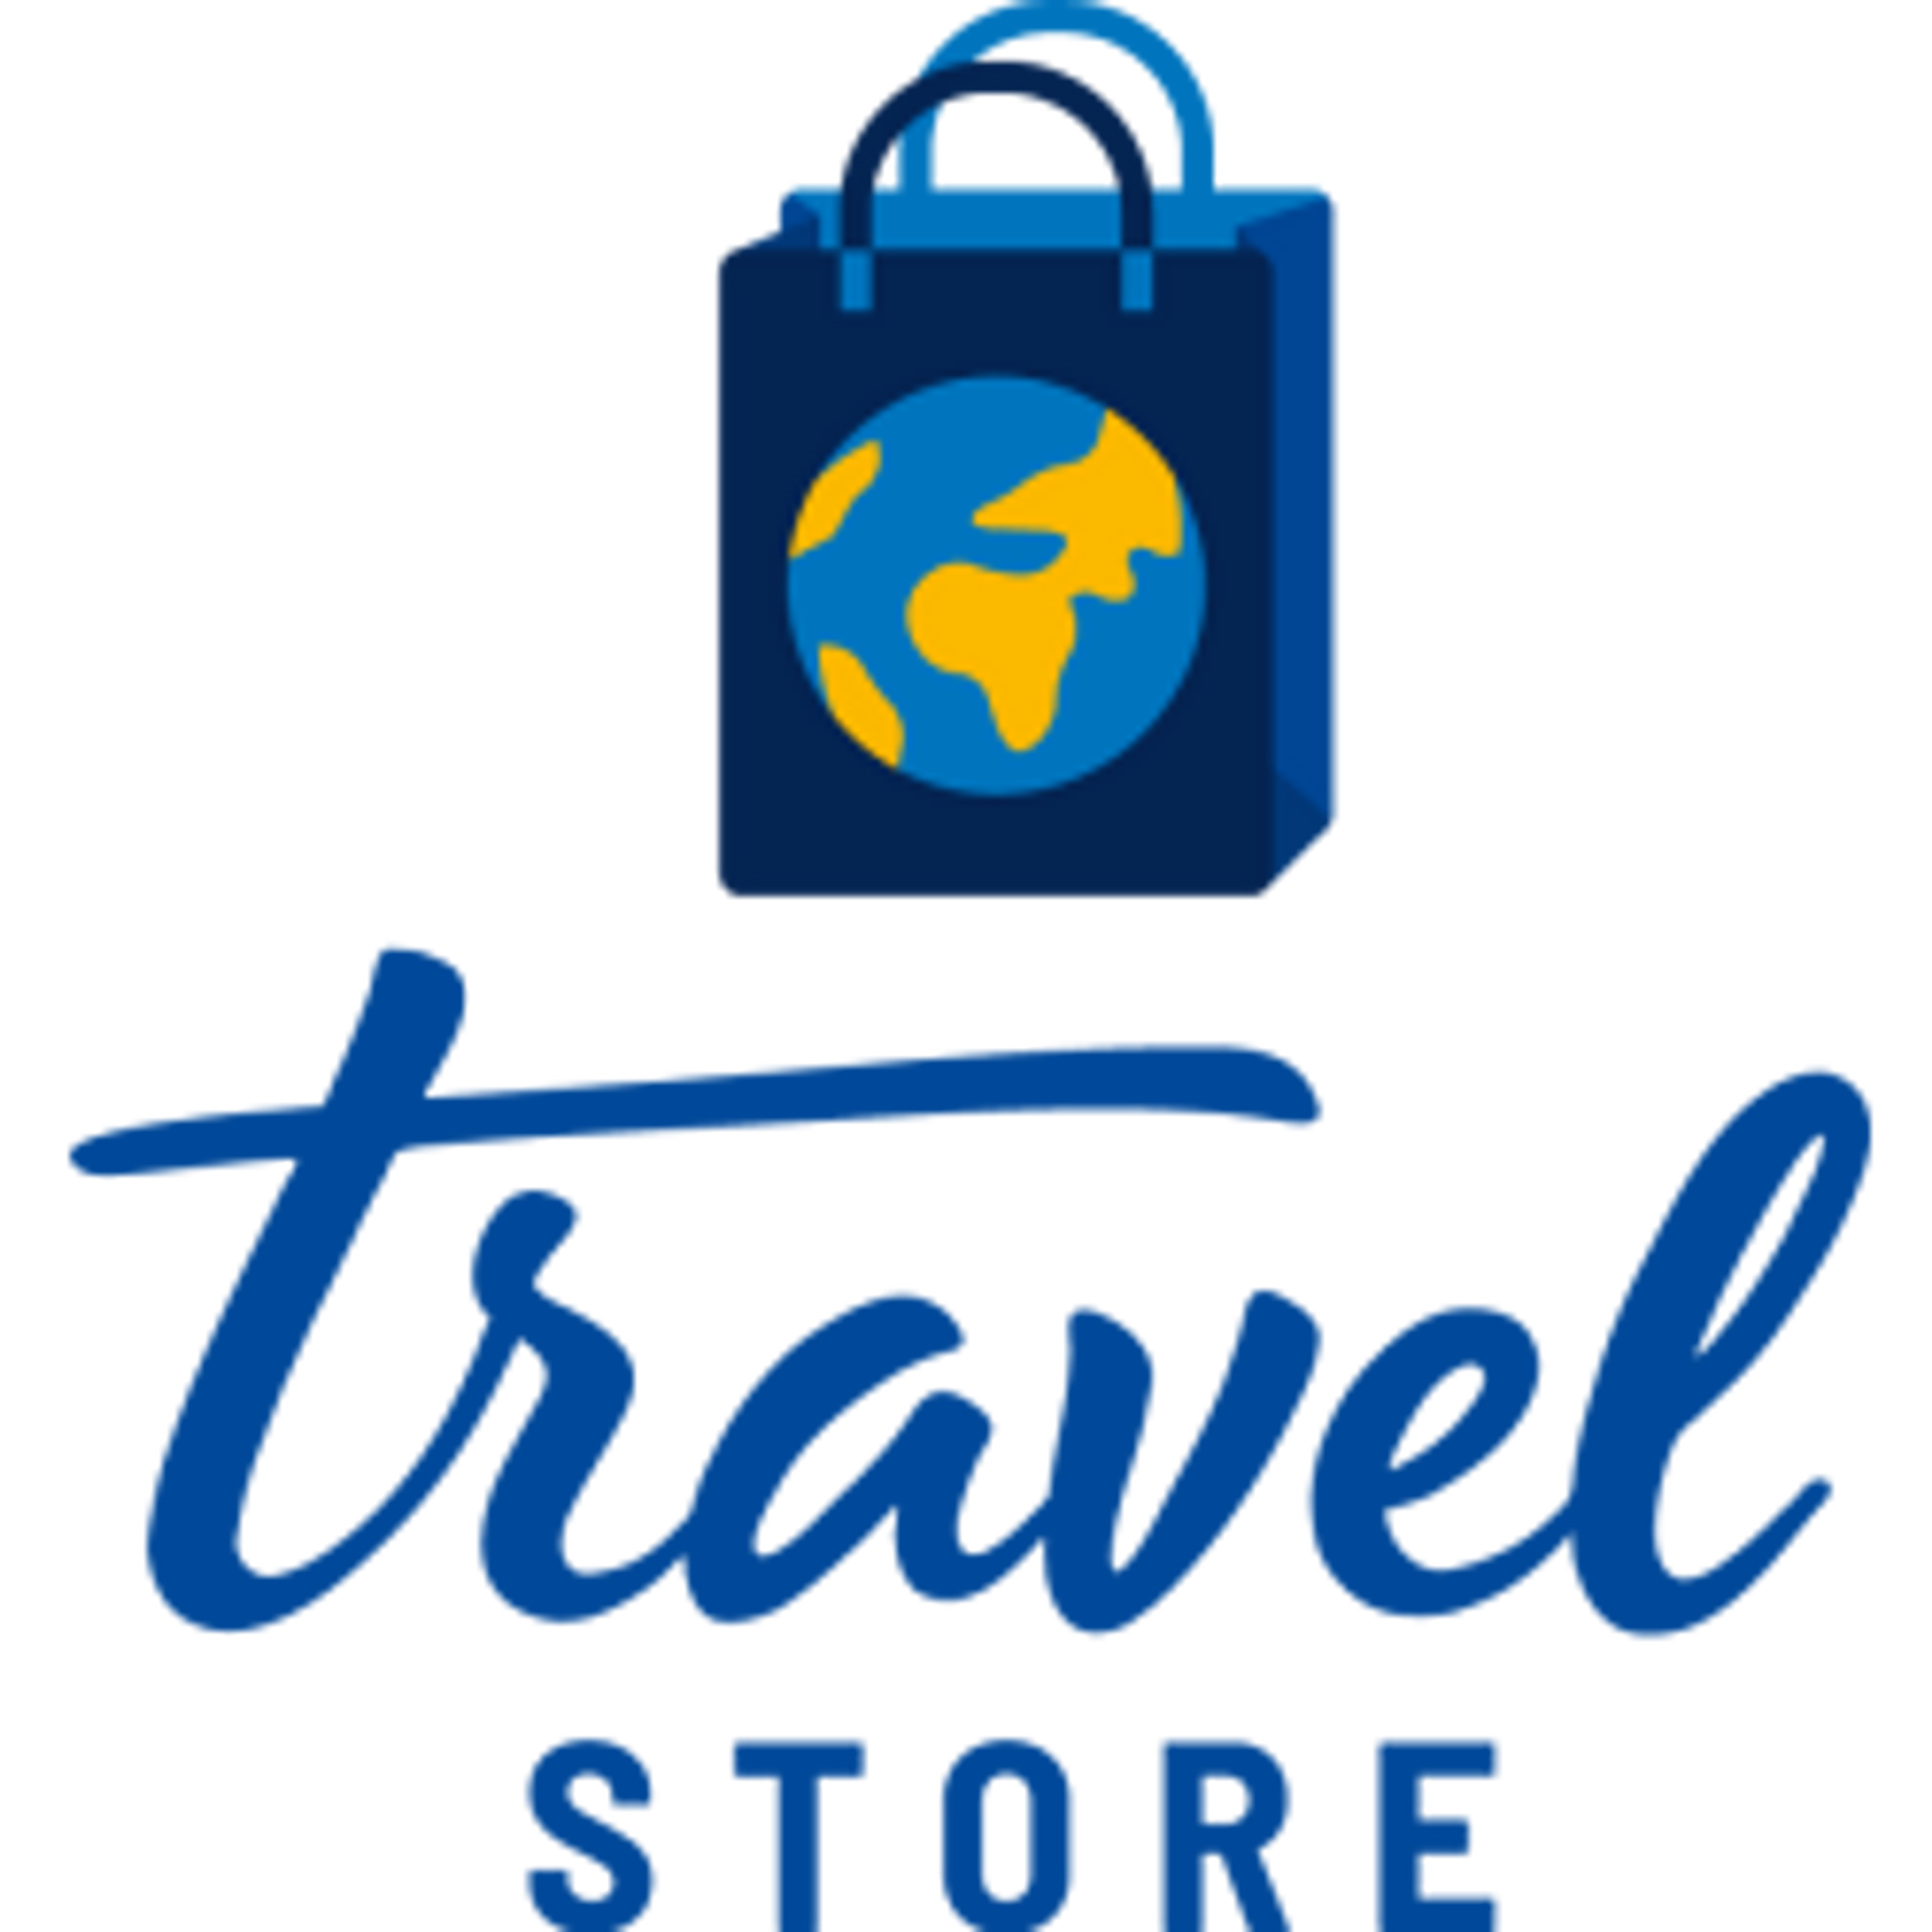 Travel Store logo